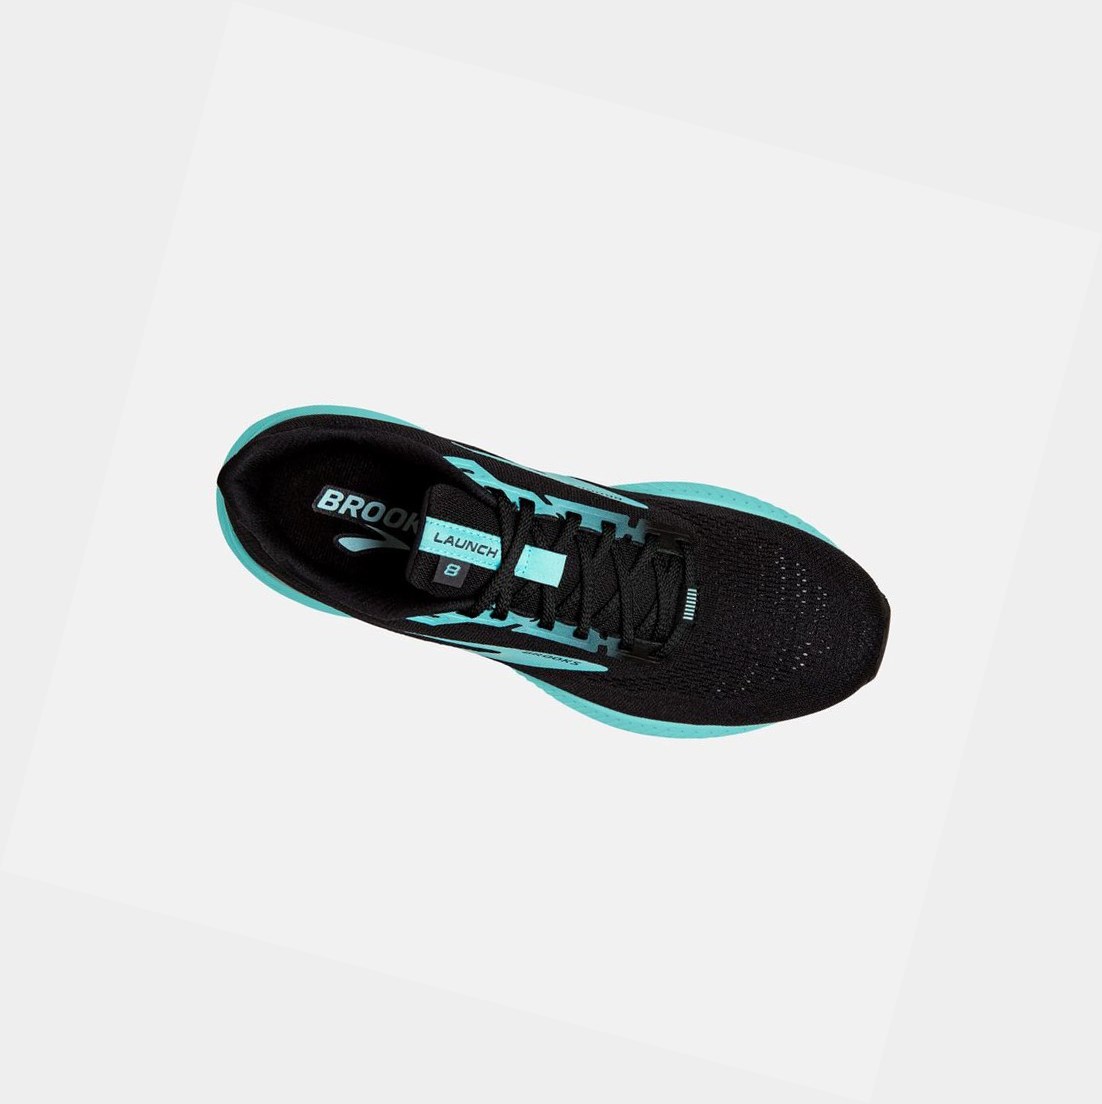 Brooks Launch 8 Women's Road Running Shoes Black / Ebony / Blue Tint | YNLP-23740